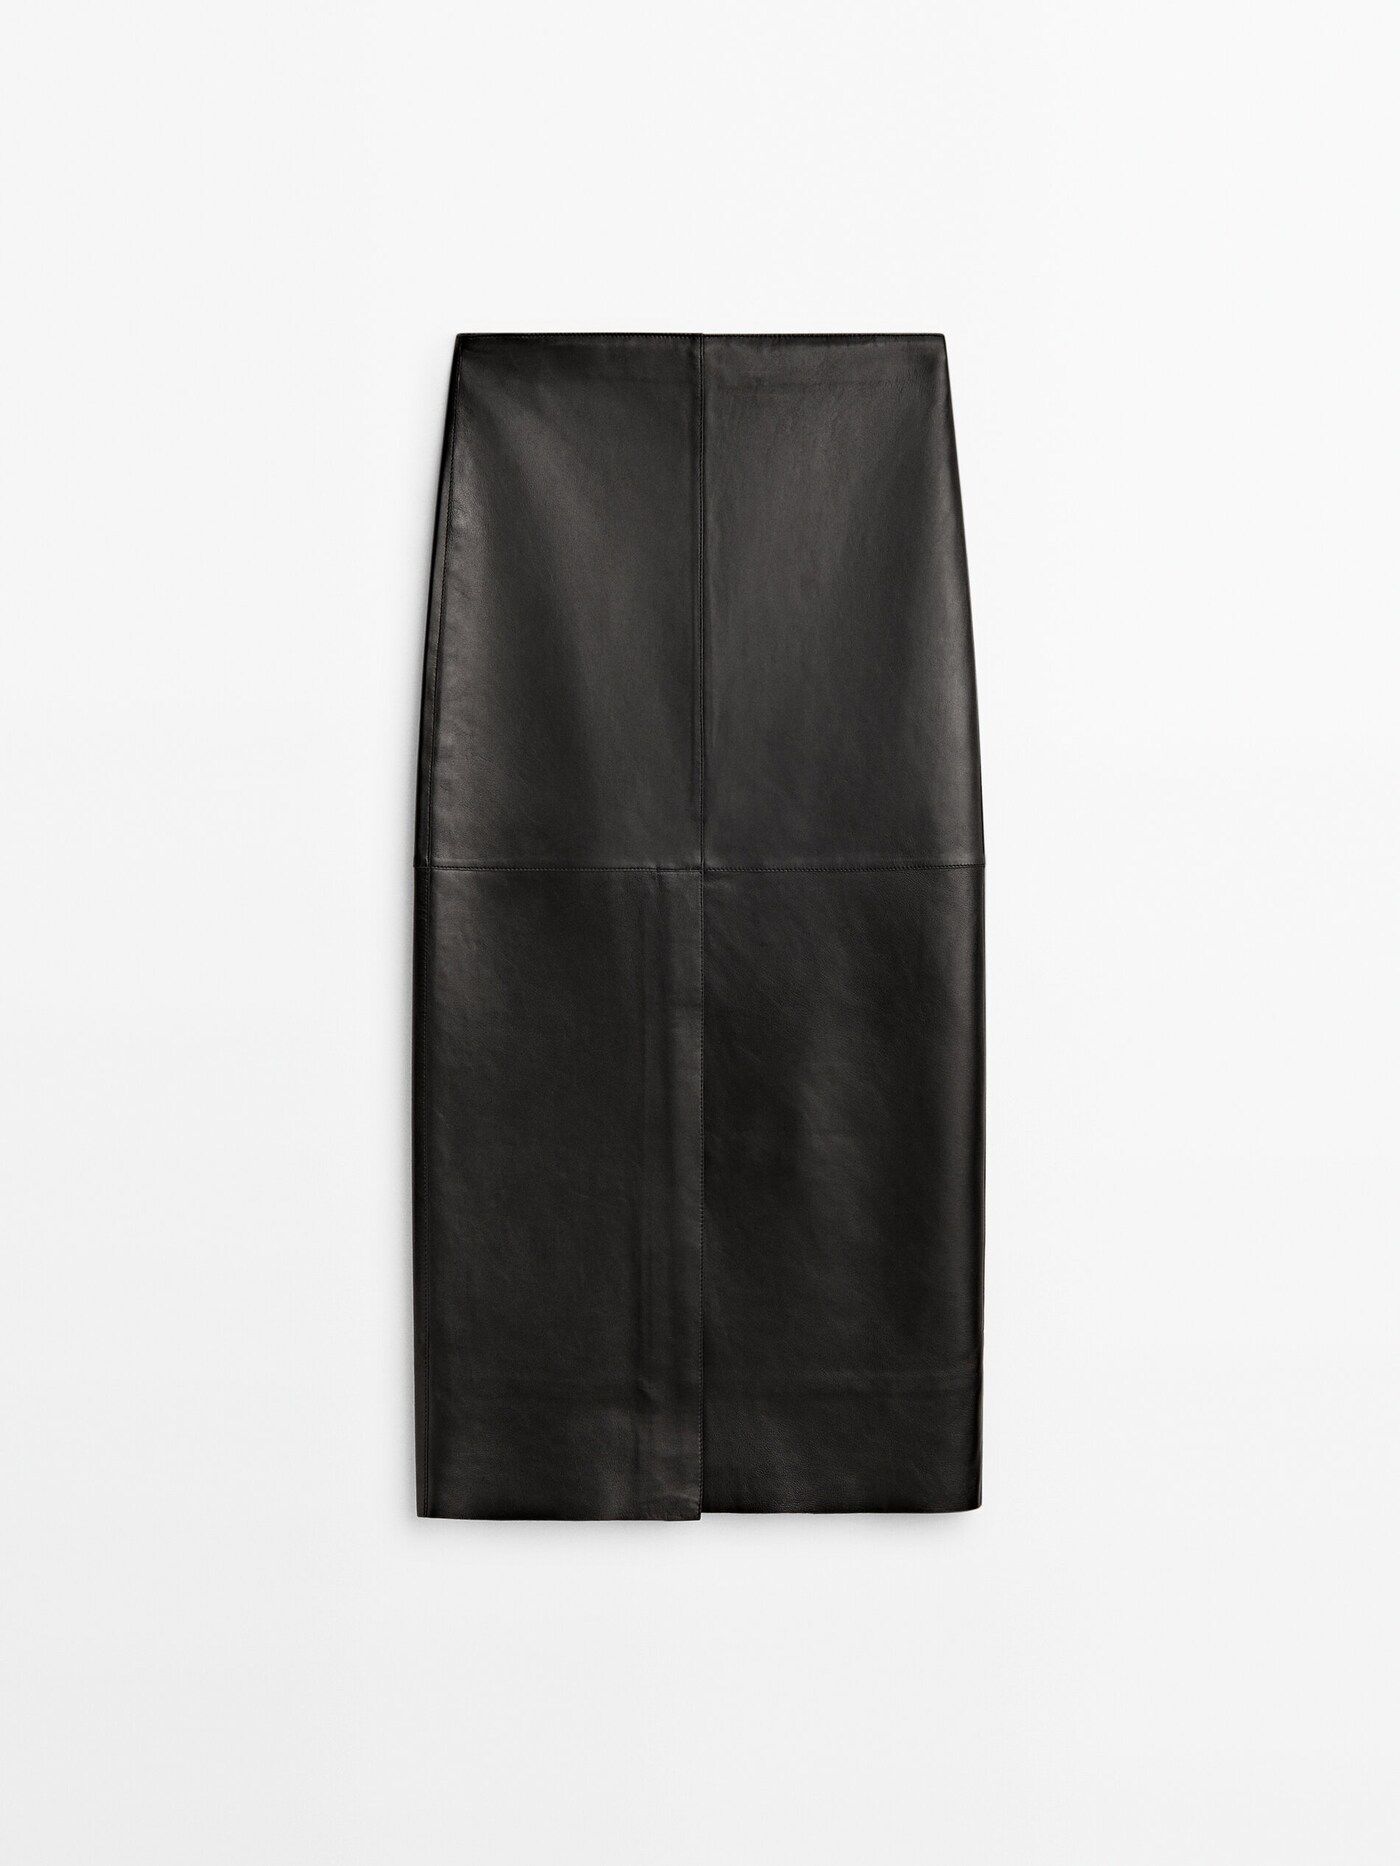 Black nappa leather long skirt - Limited Edition | Massimo Dutti UK